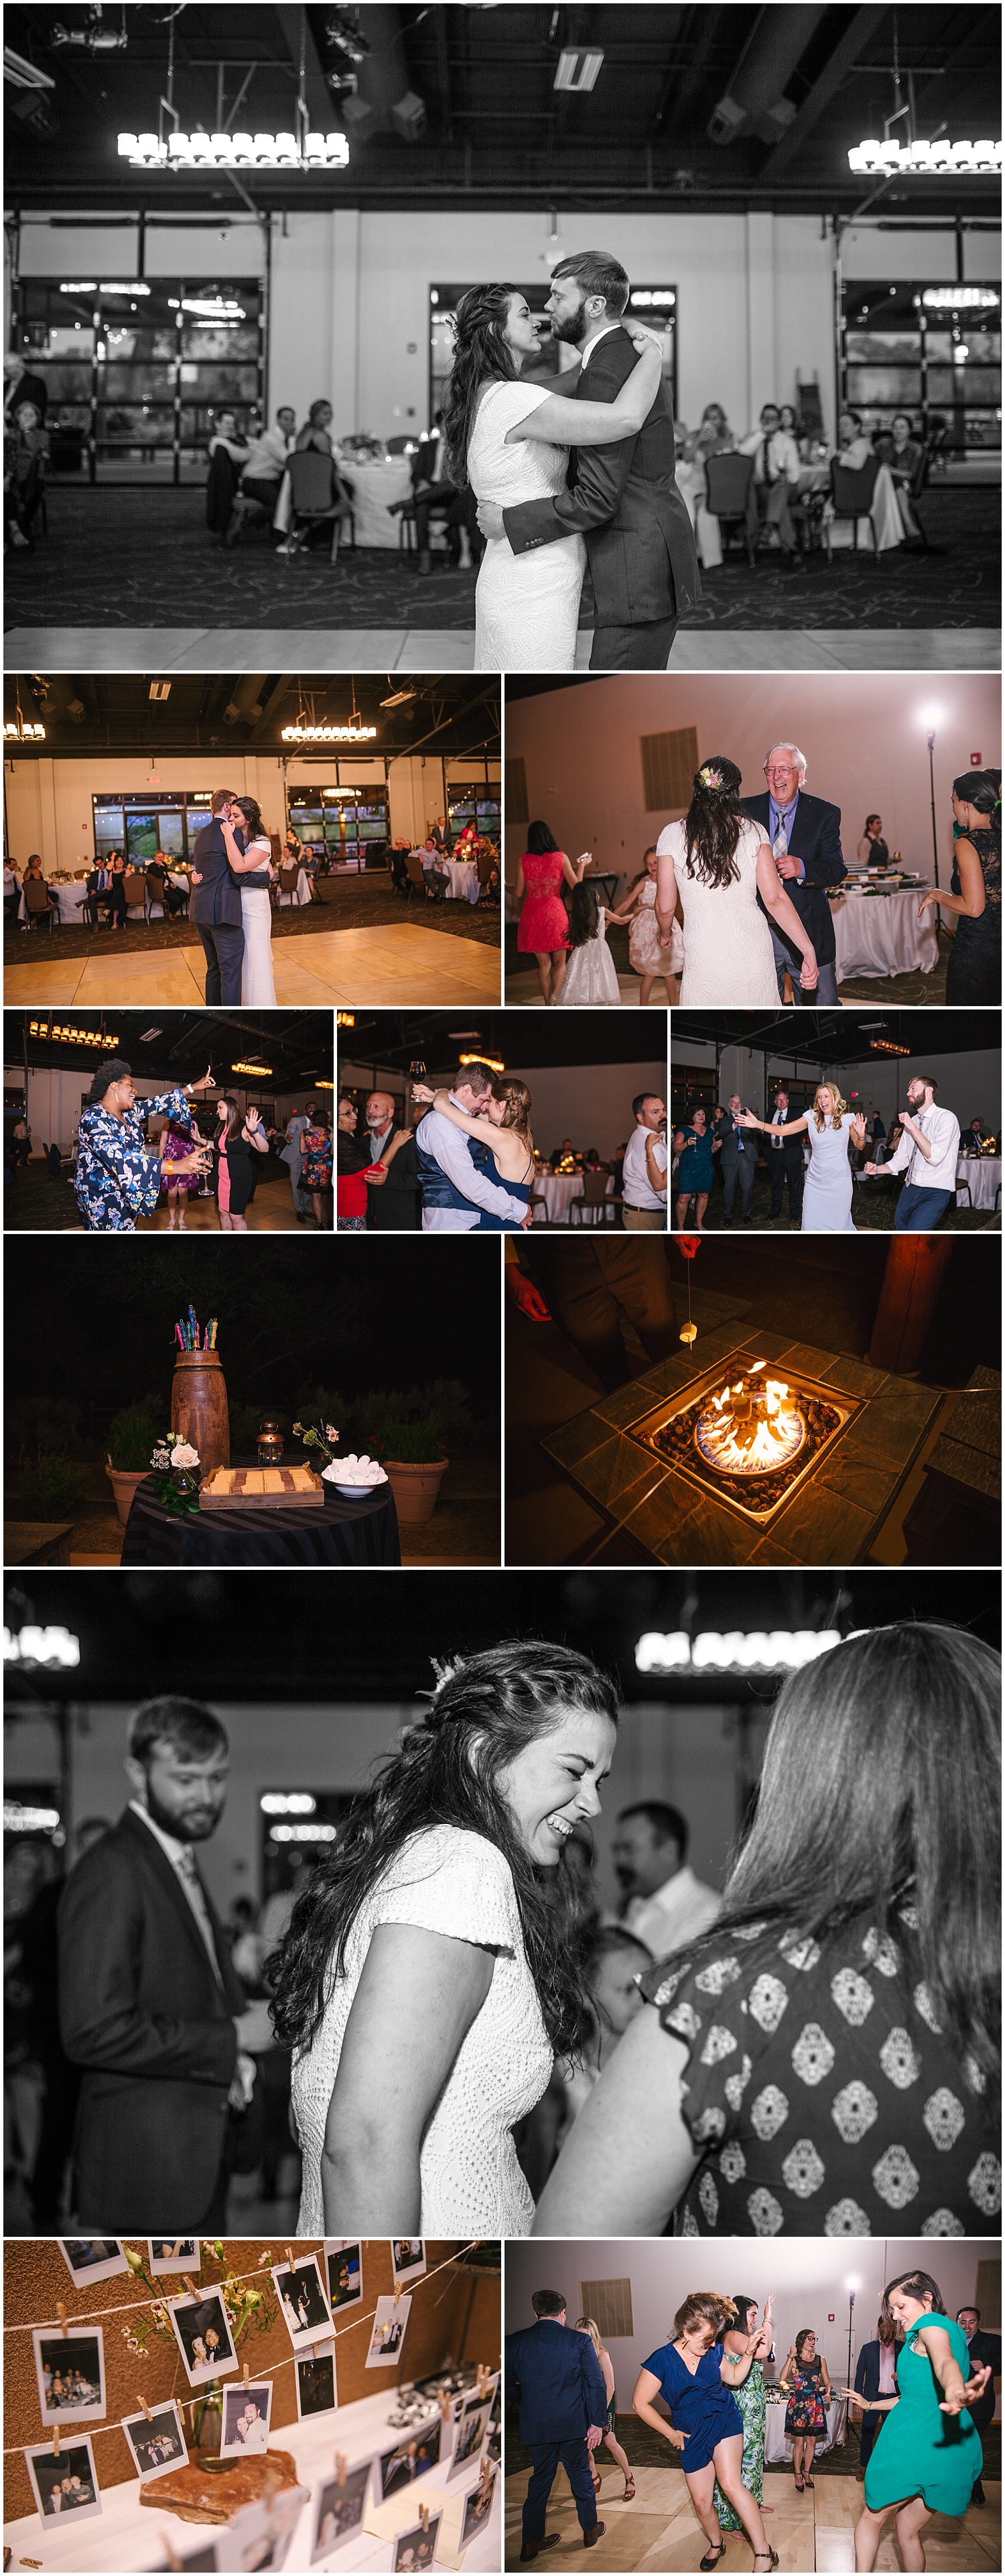 Dancing photos at Hyatt Regency Tamaya wedding reception in New Mexico